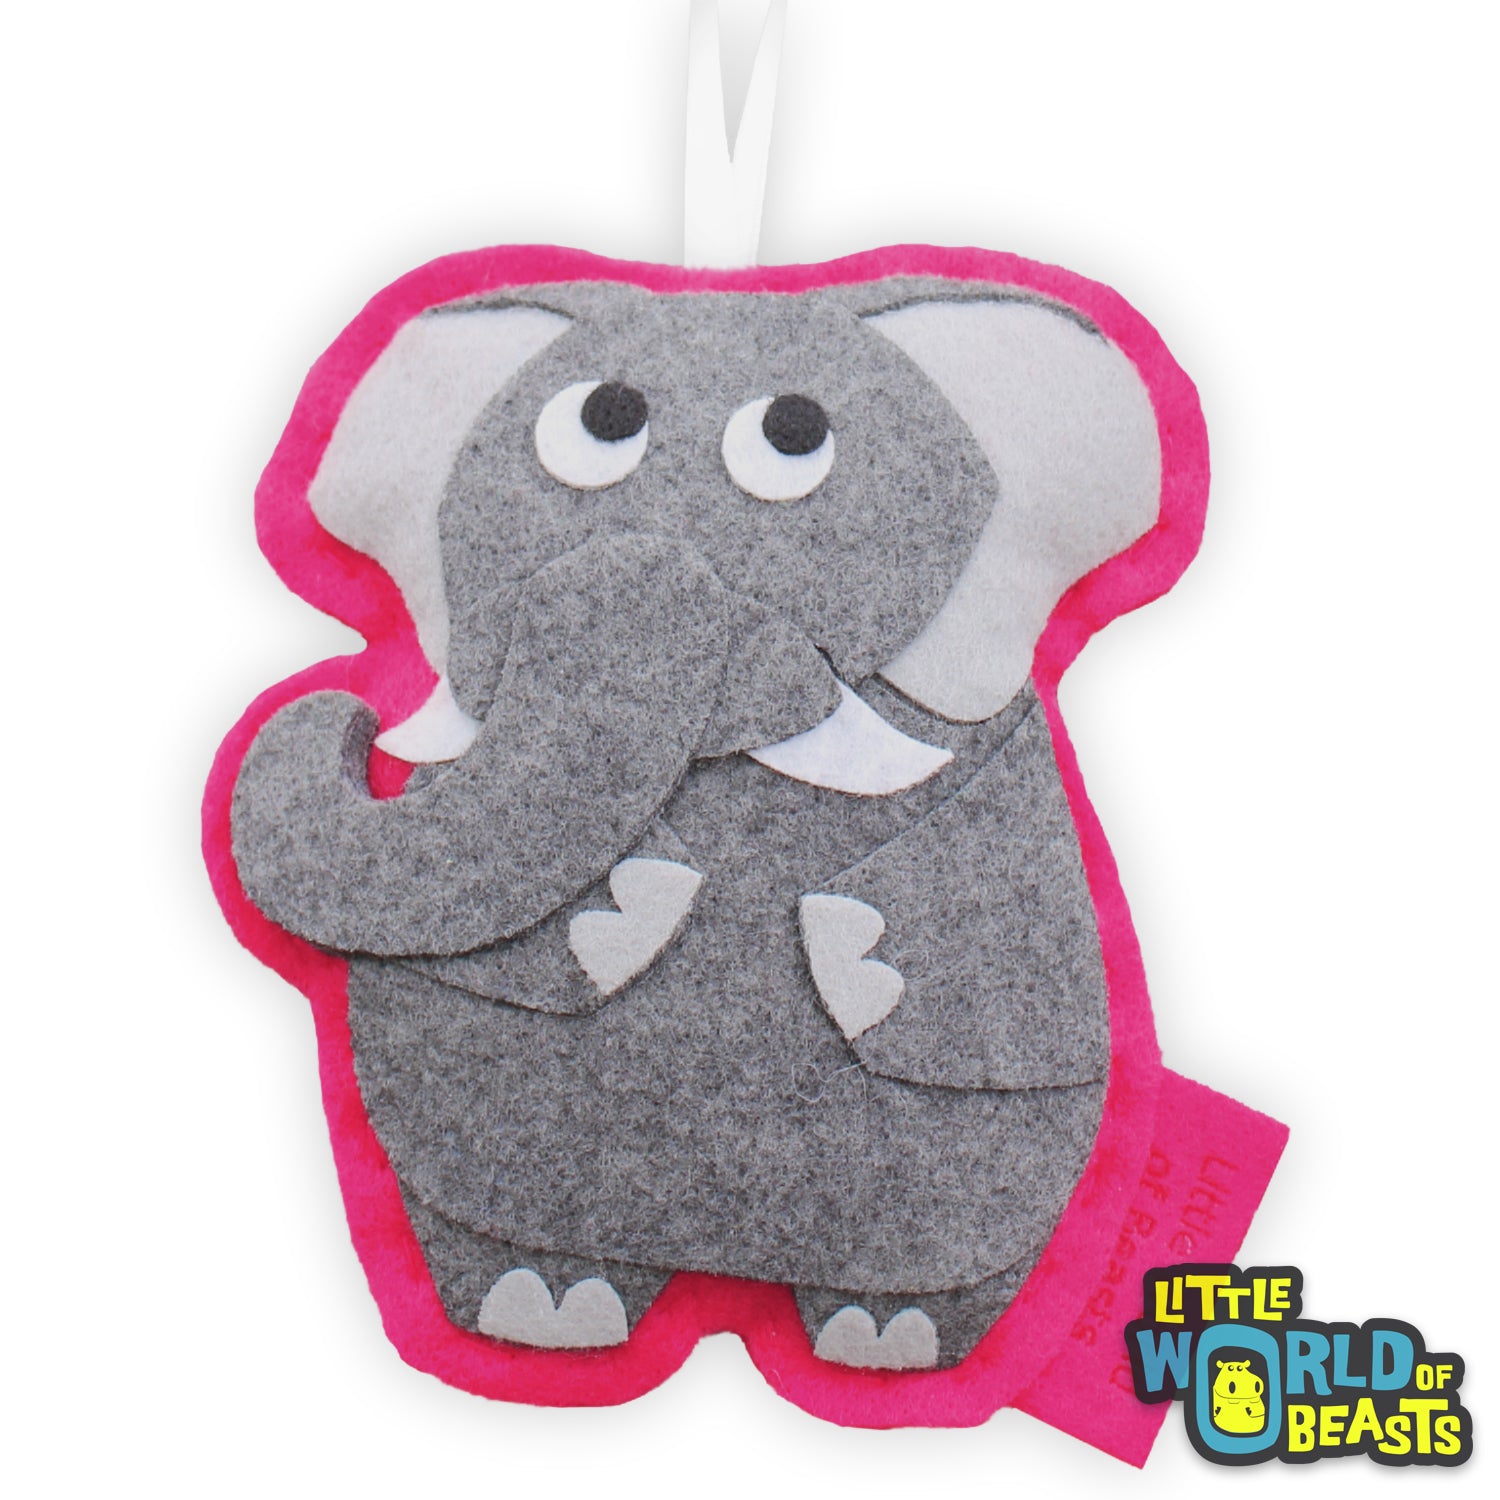 Elephant Christmas Ornament